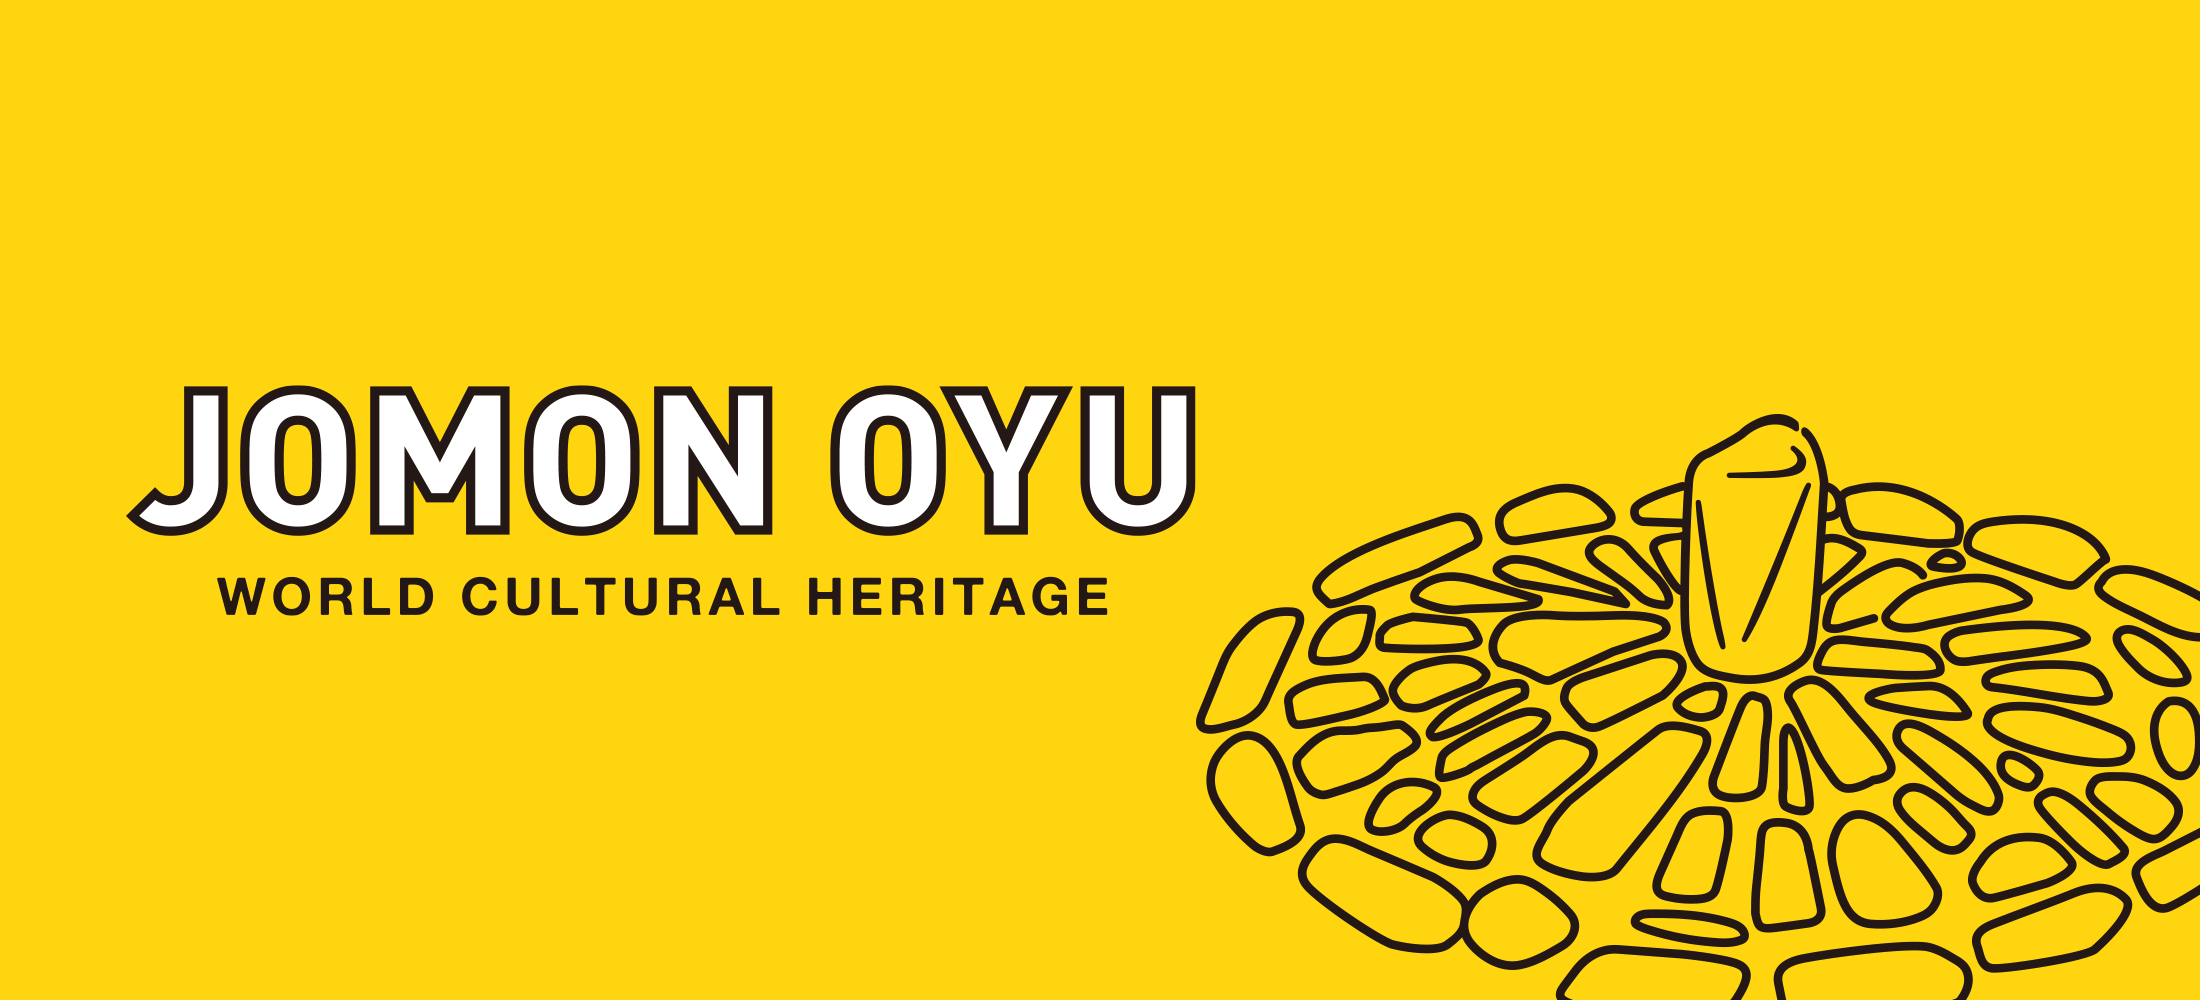 JOMON OYU -WORLD CULTURAL HERITAGE-